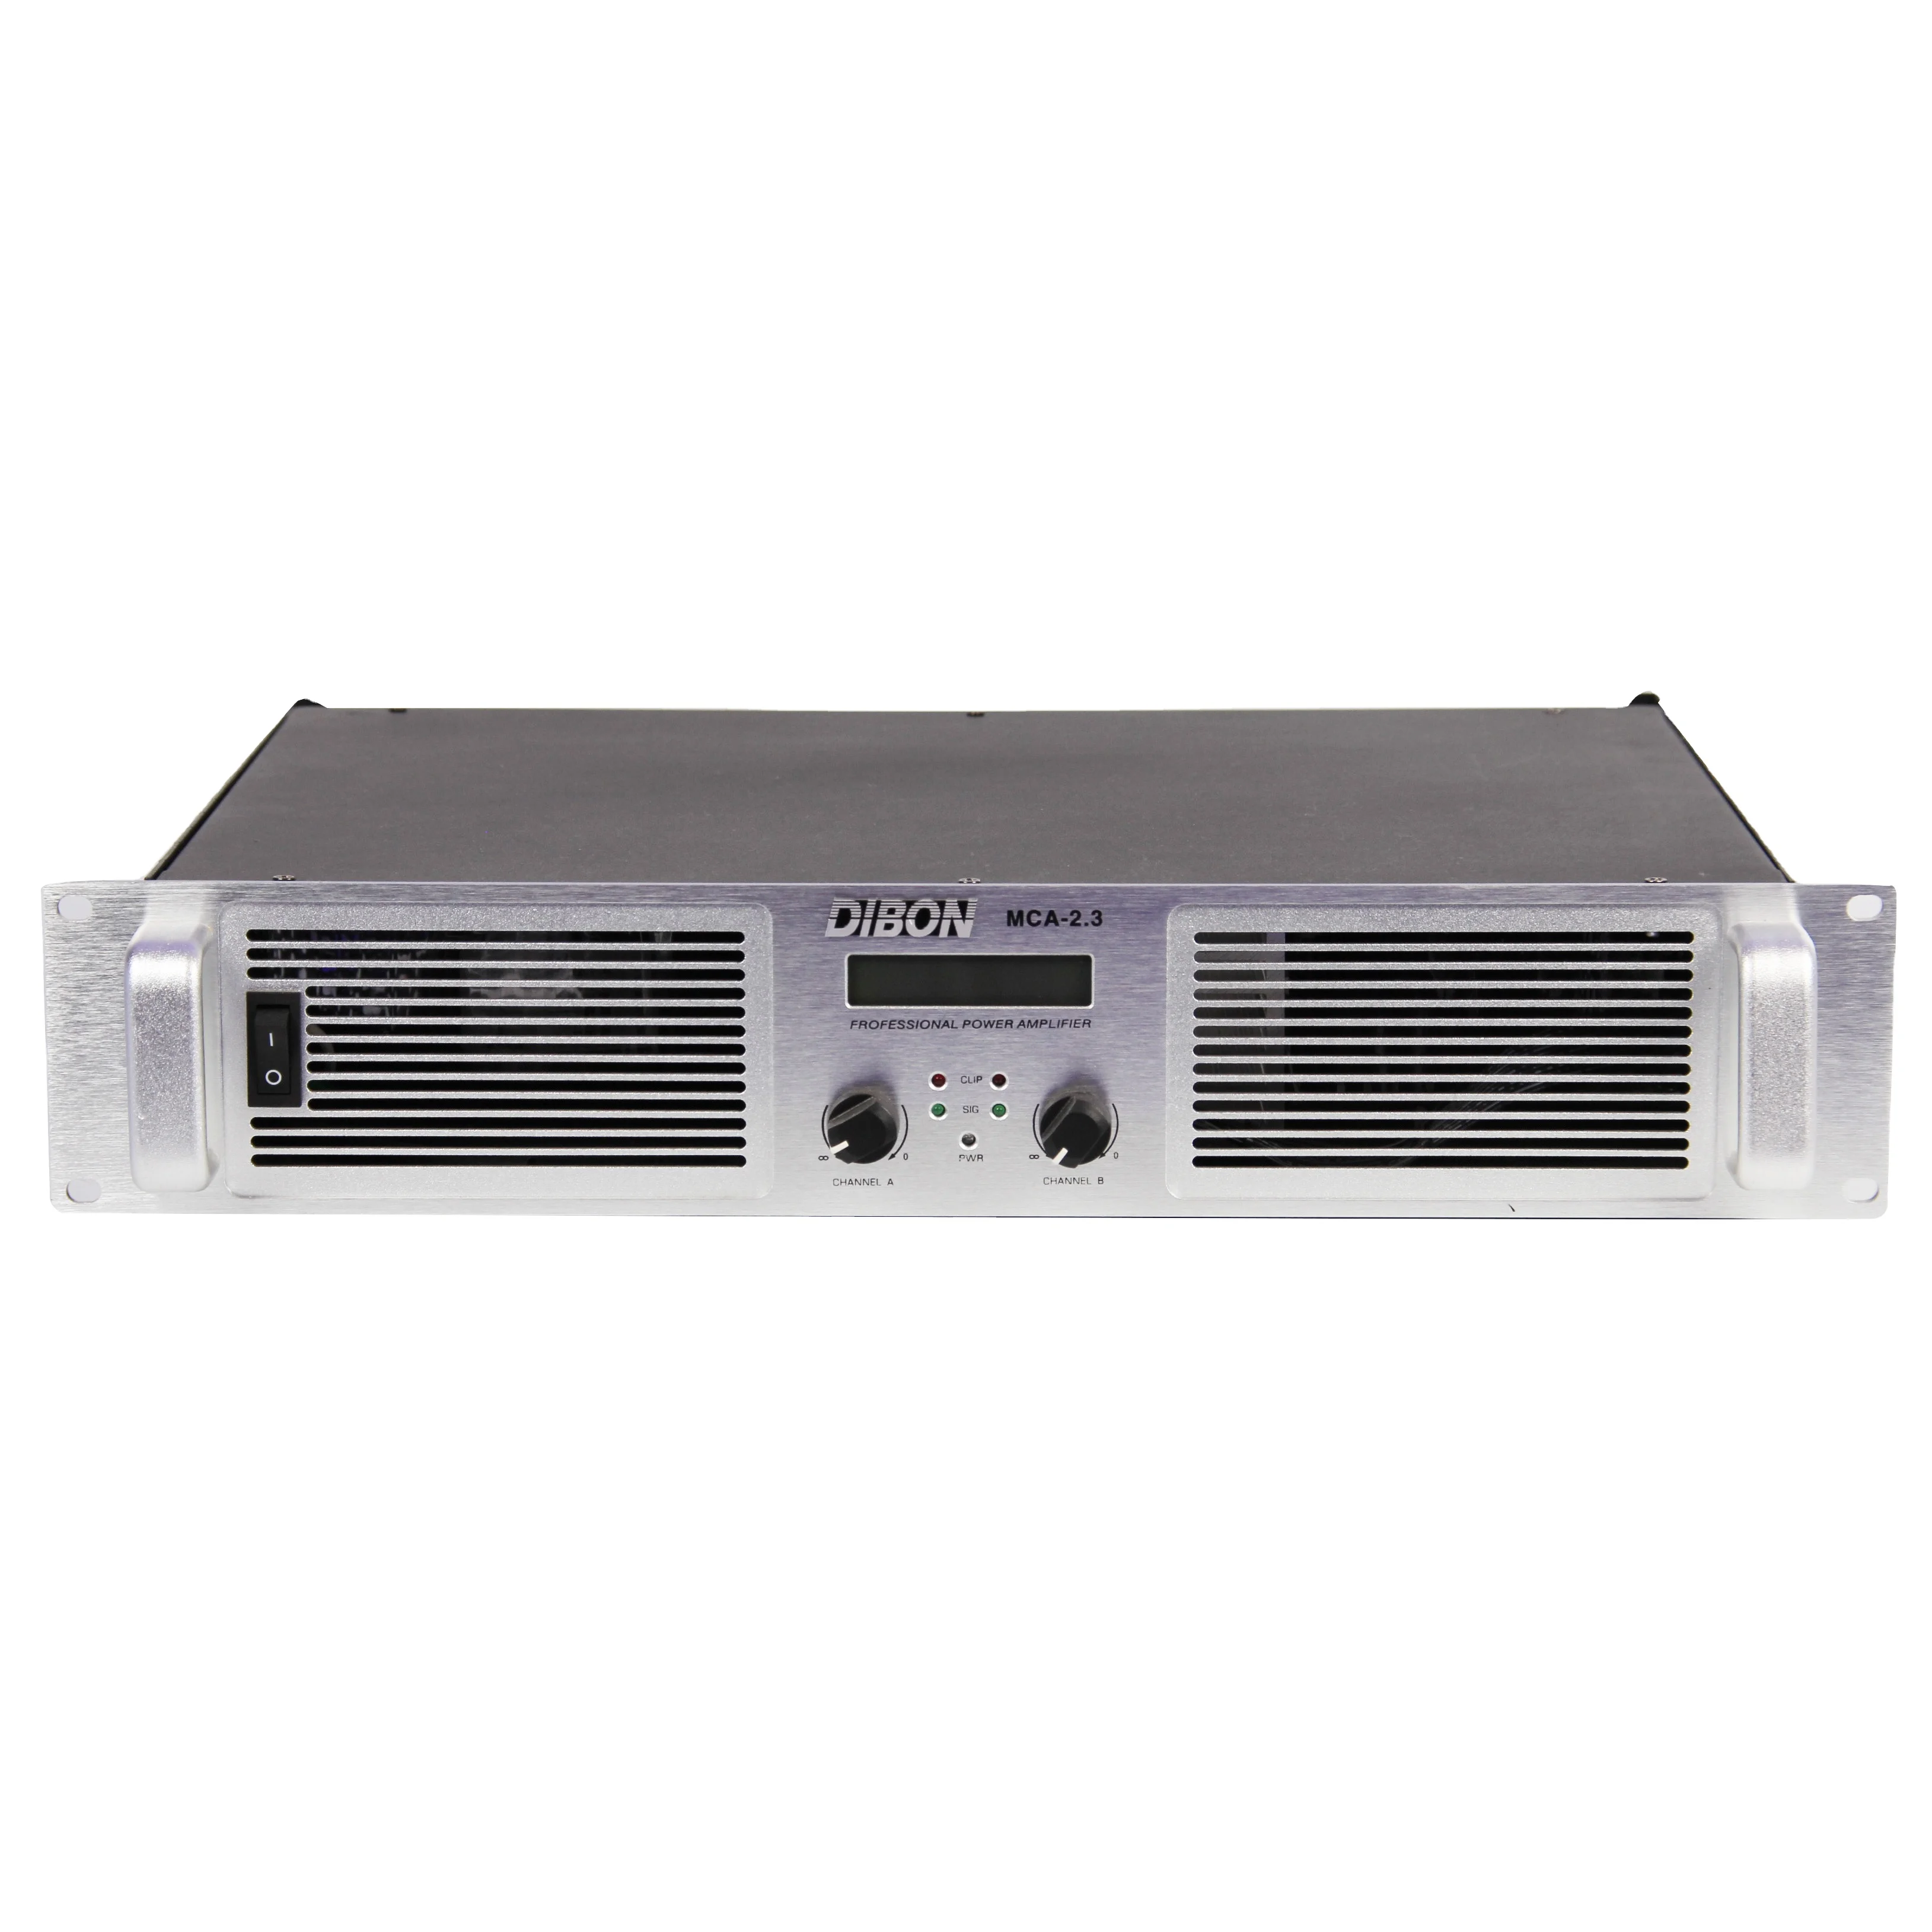 Professional Amplifier Public Address System Amplifier MCA-7.3 public